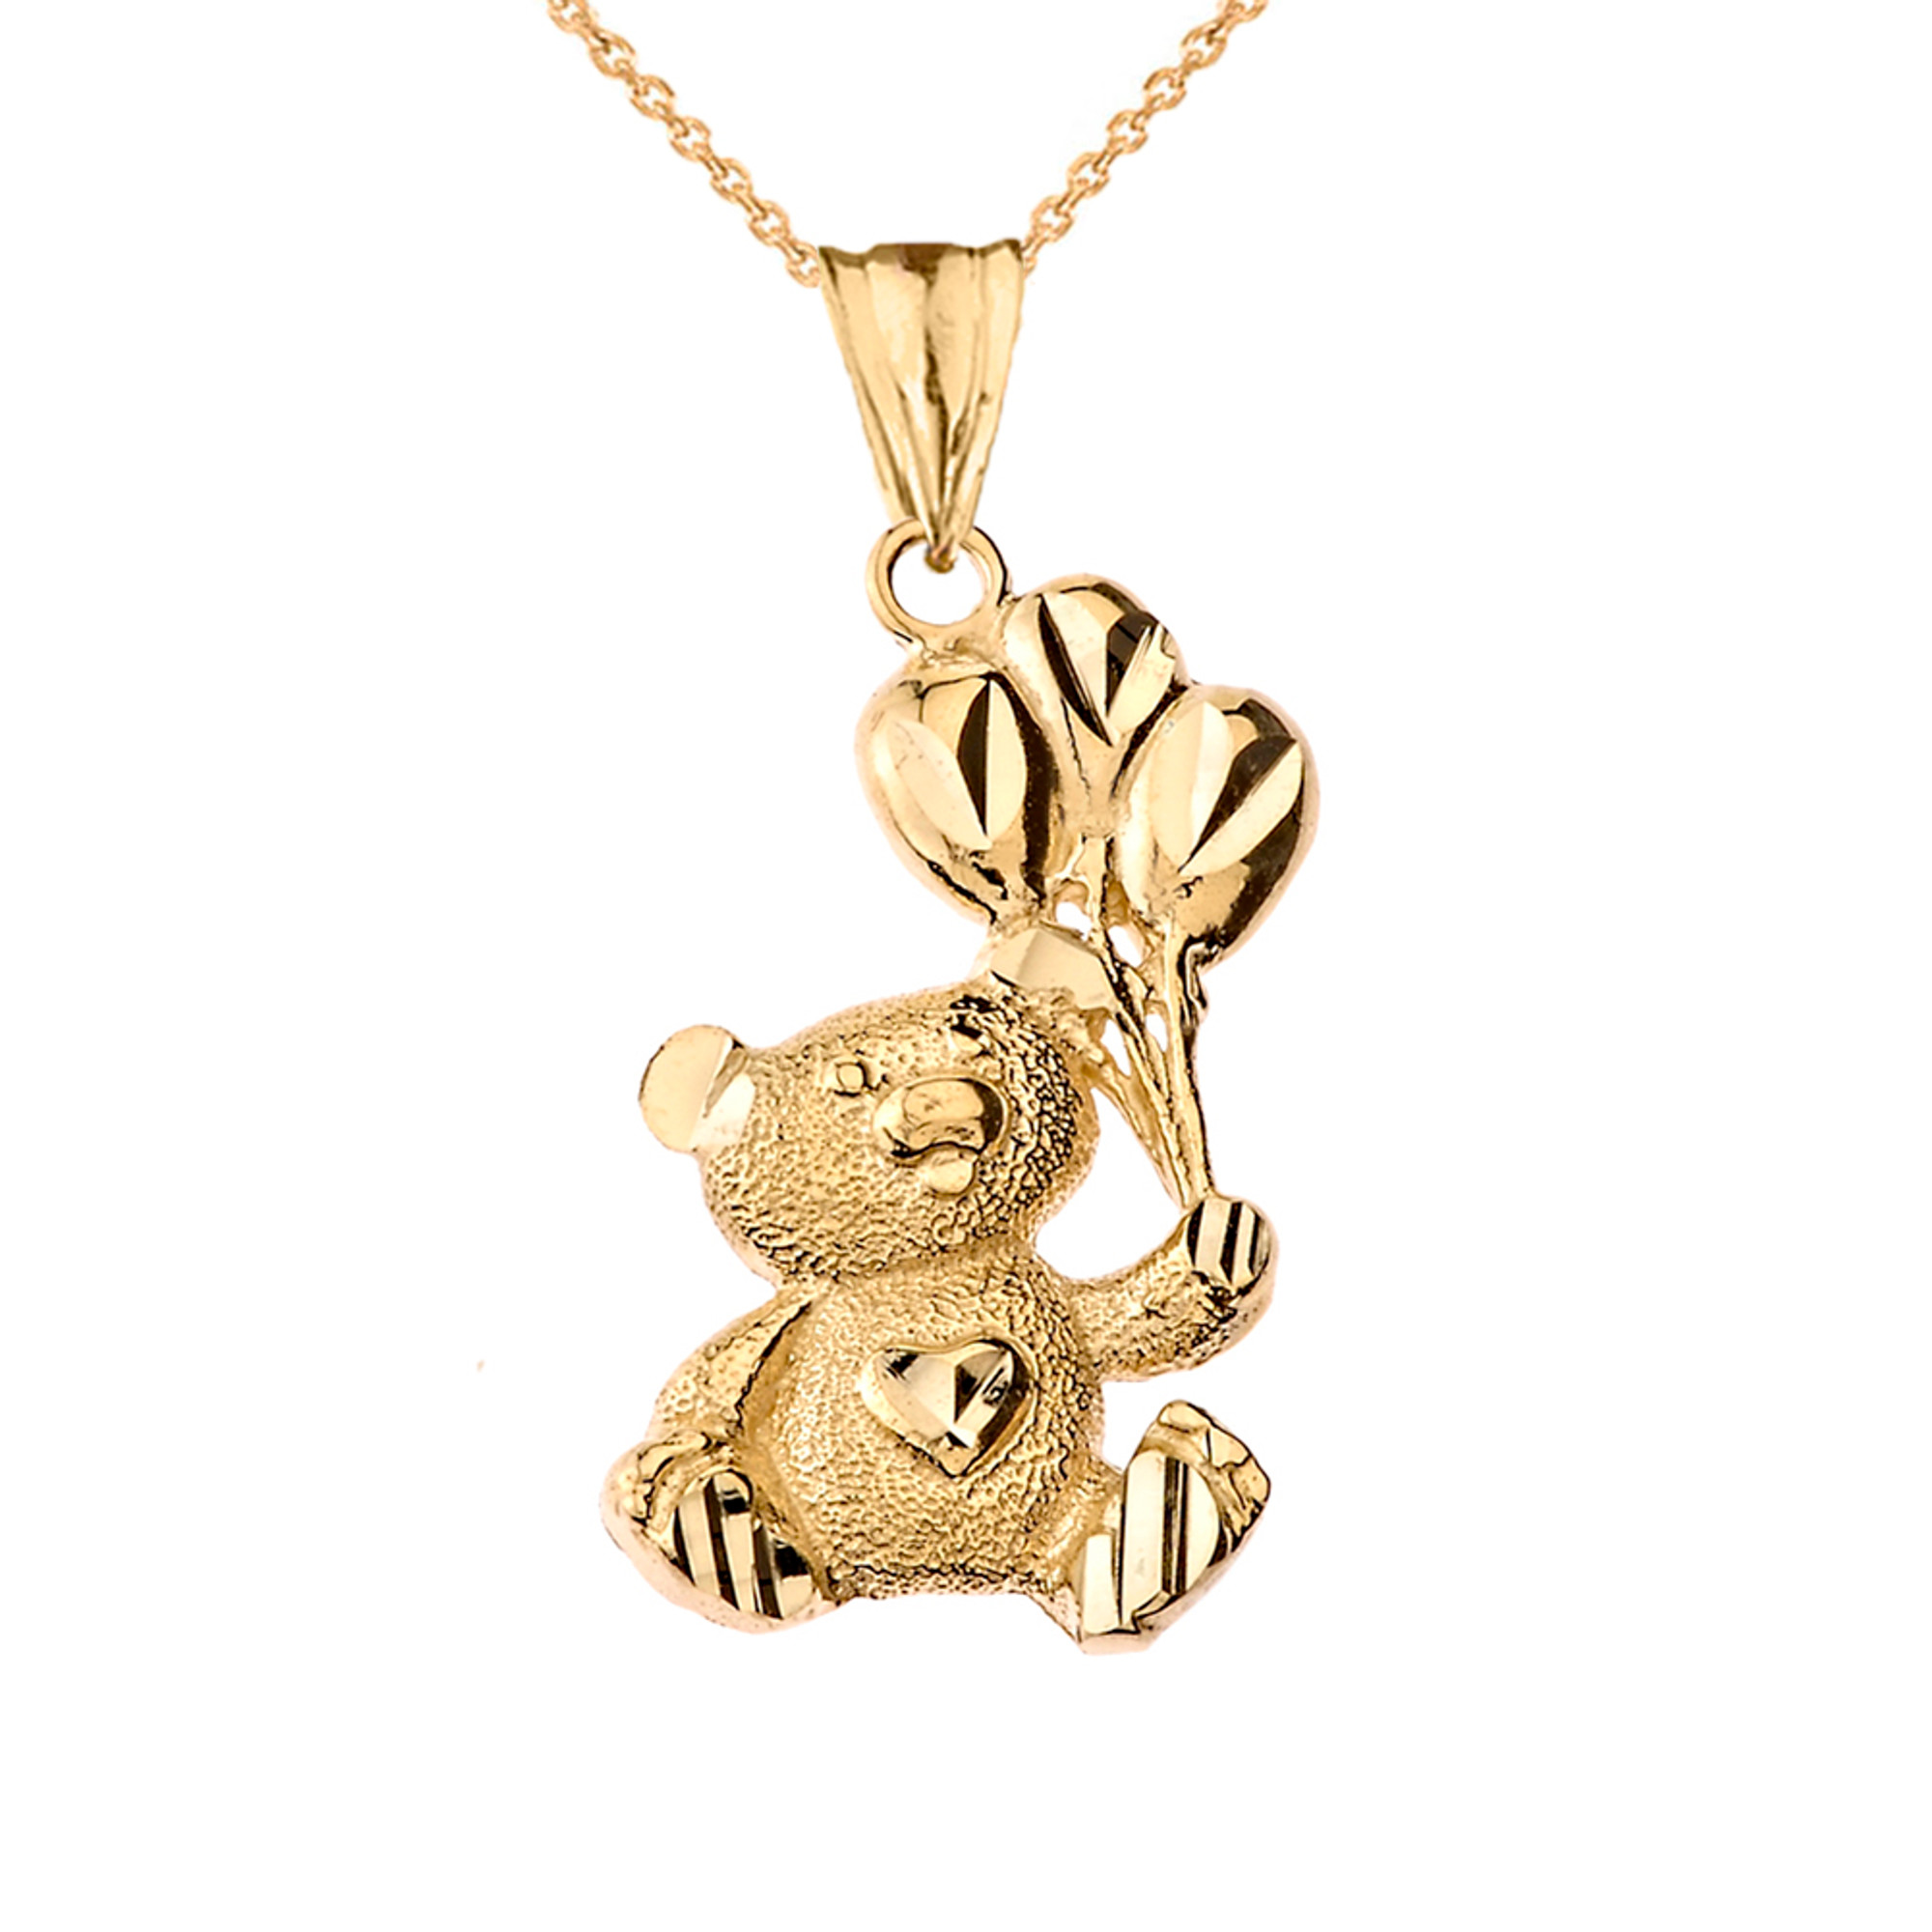 Adjustable Mama Bear Necklace – The Golden Bear